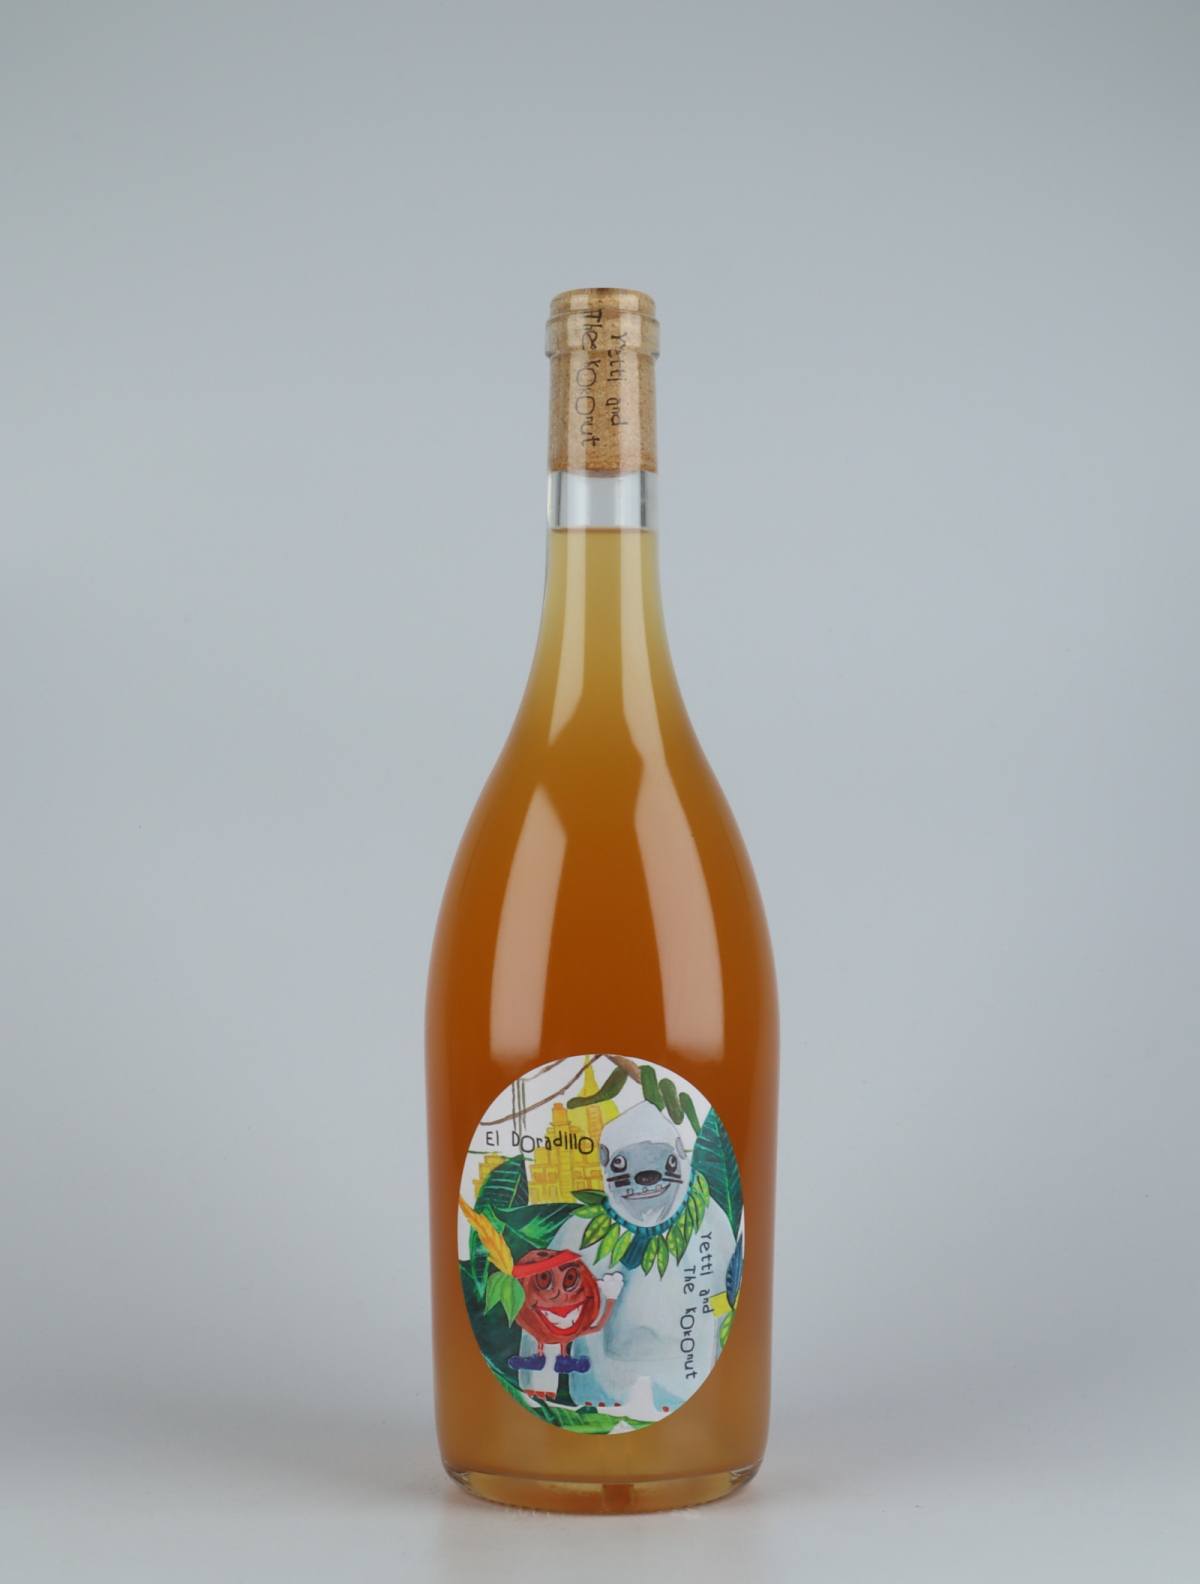 A bottle 2020 El Doradillo Orange wine from Yetti and the Kokonut, Barossa Valley in Australia